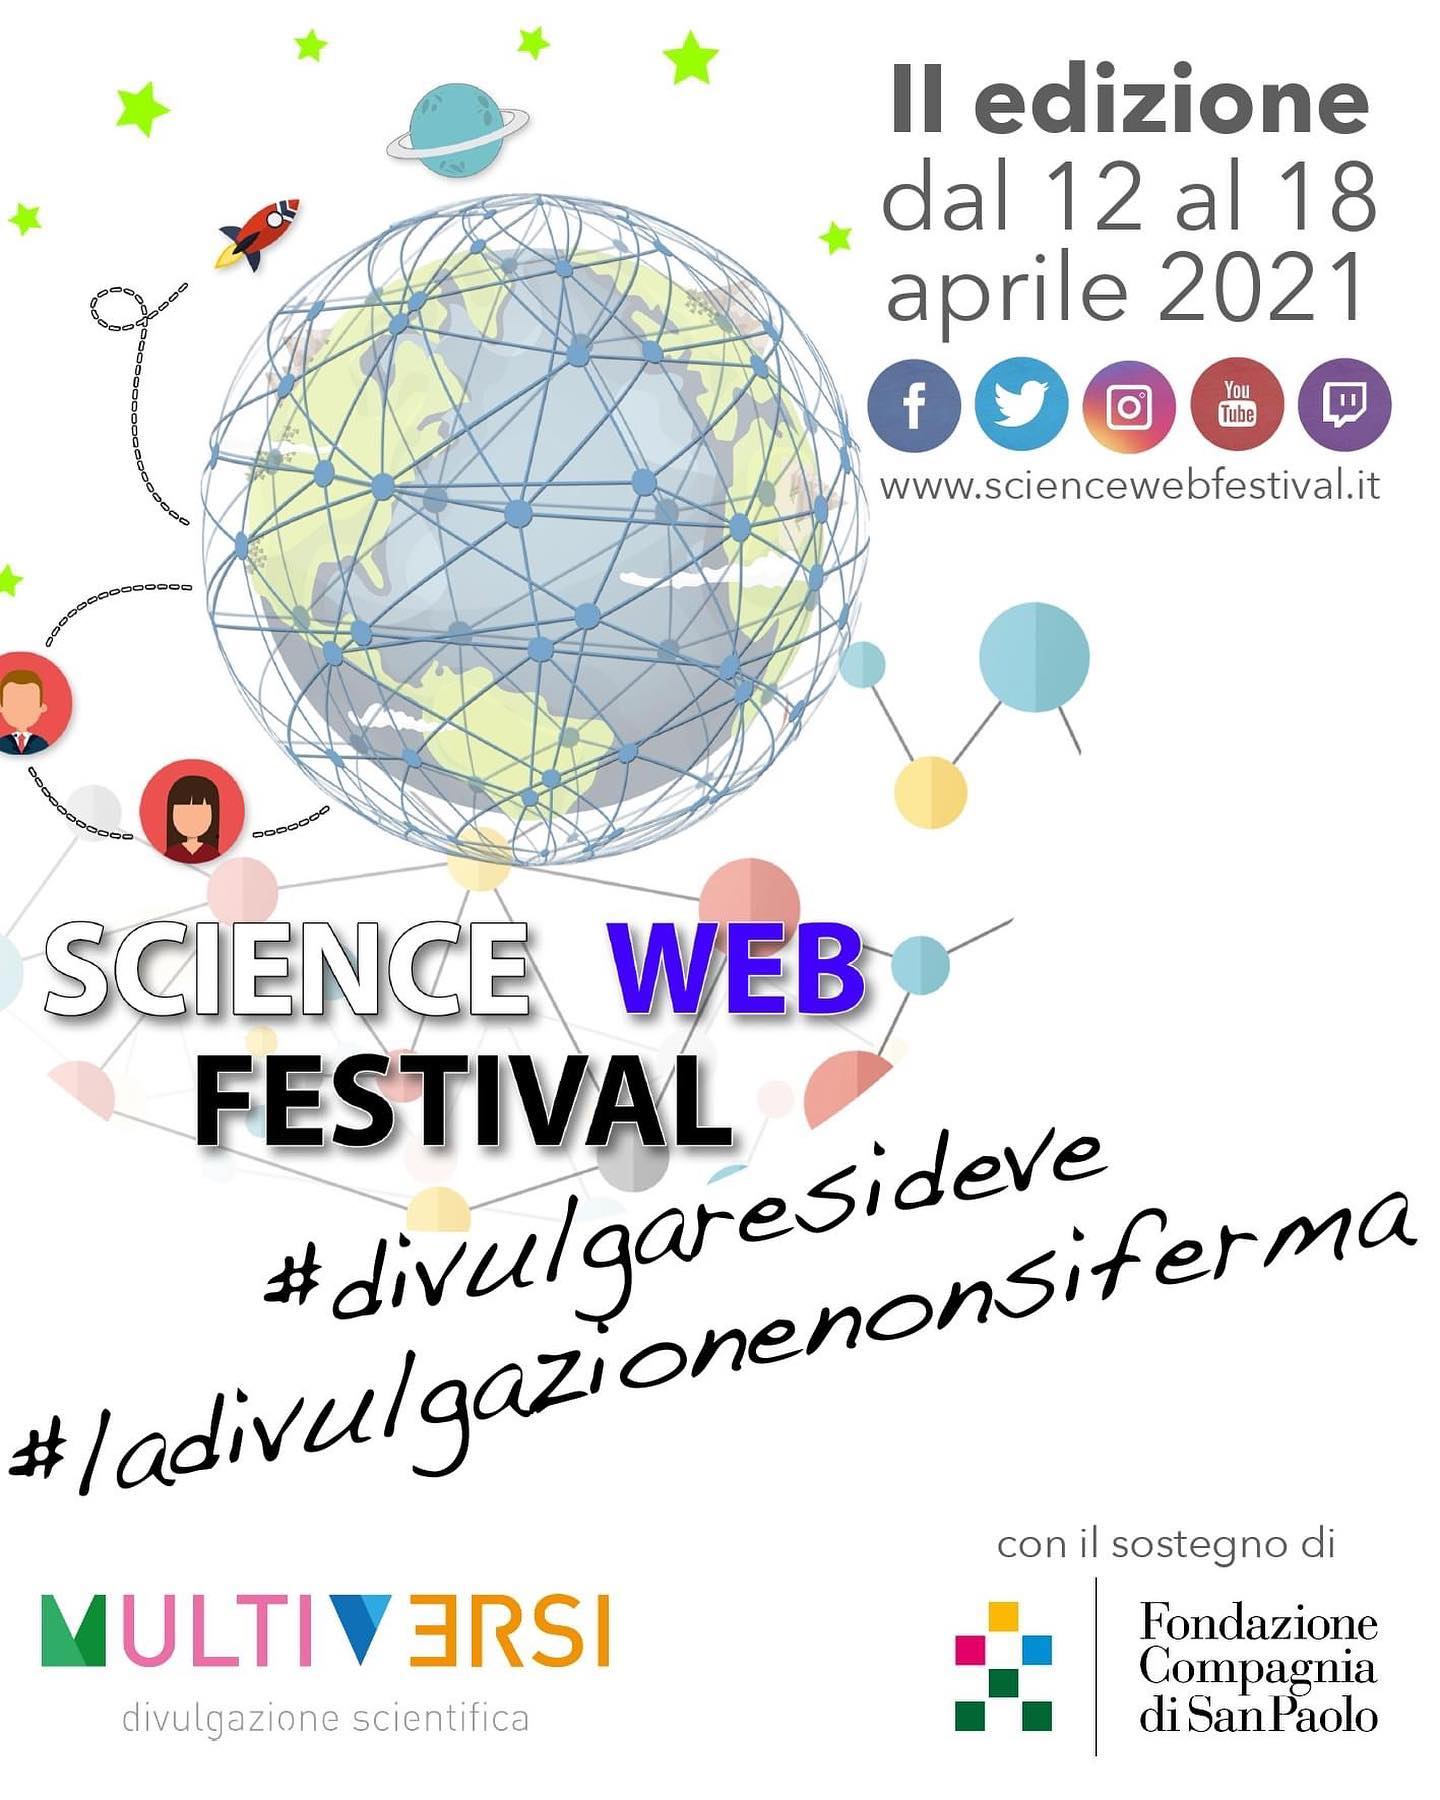 Science Web Festival, dal 12 al 18 aprile 2021